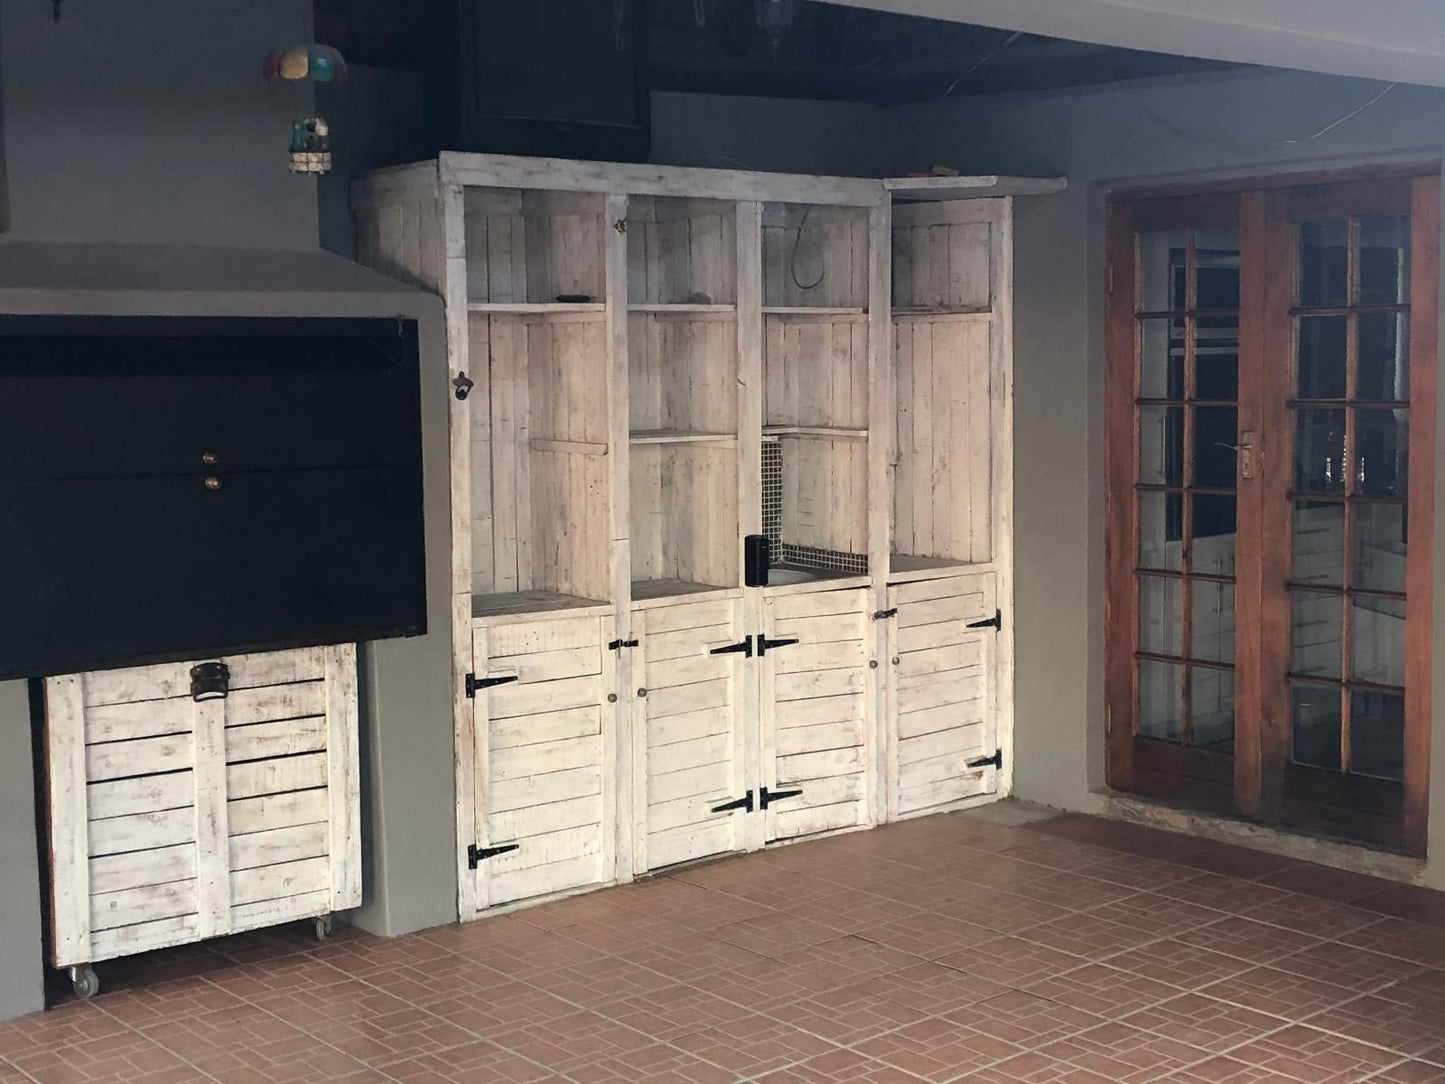 The Homestead Cottage Dan Pienaar Bloemfontein Free State South Africa Door, Architecture, Kitchen